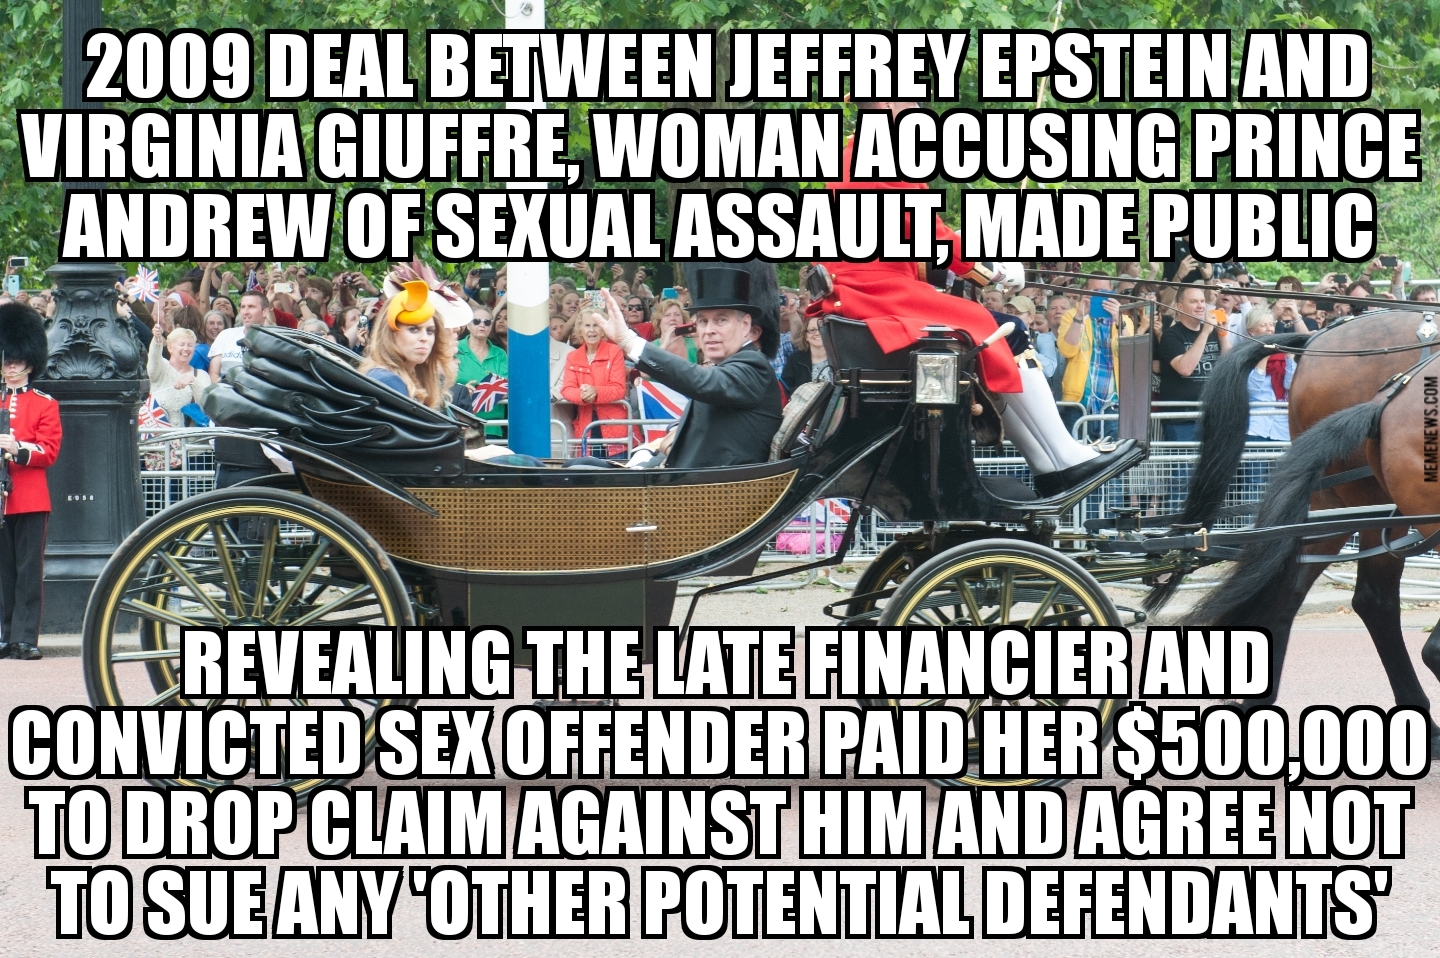 Jeffrey Epstein-Virginia Giuffre deal revealed